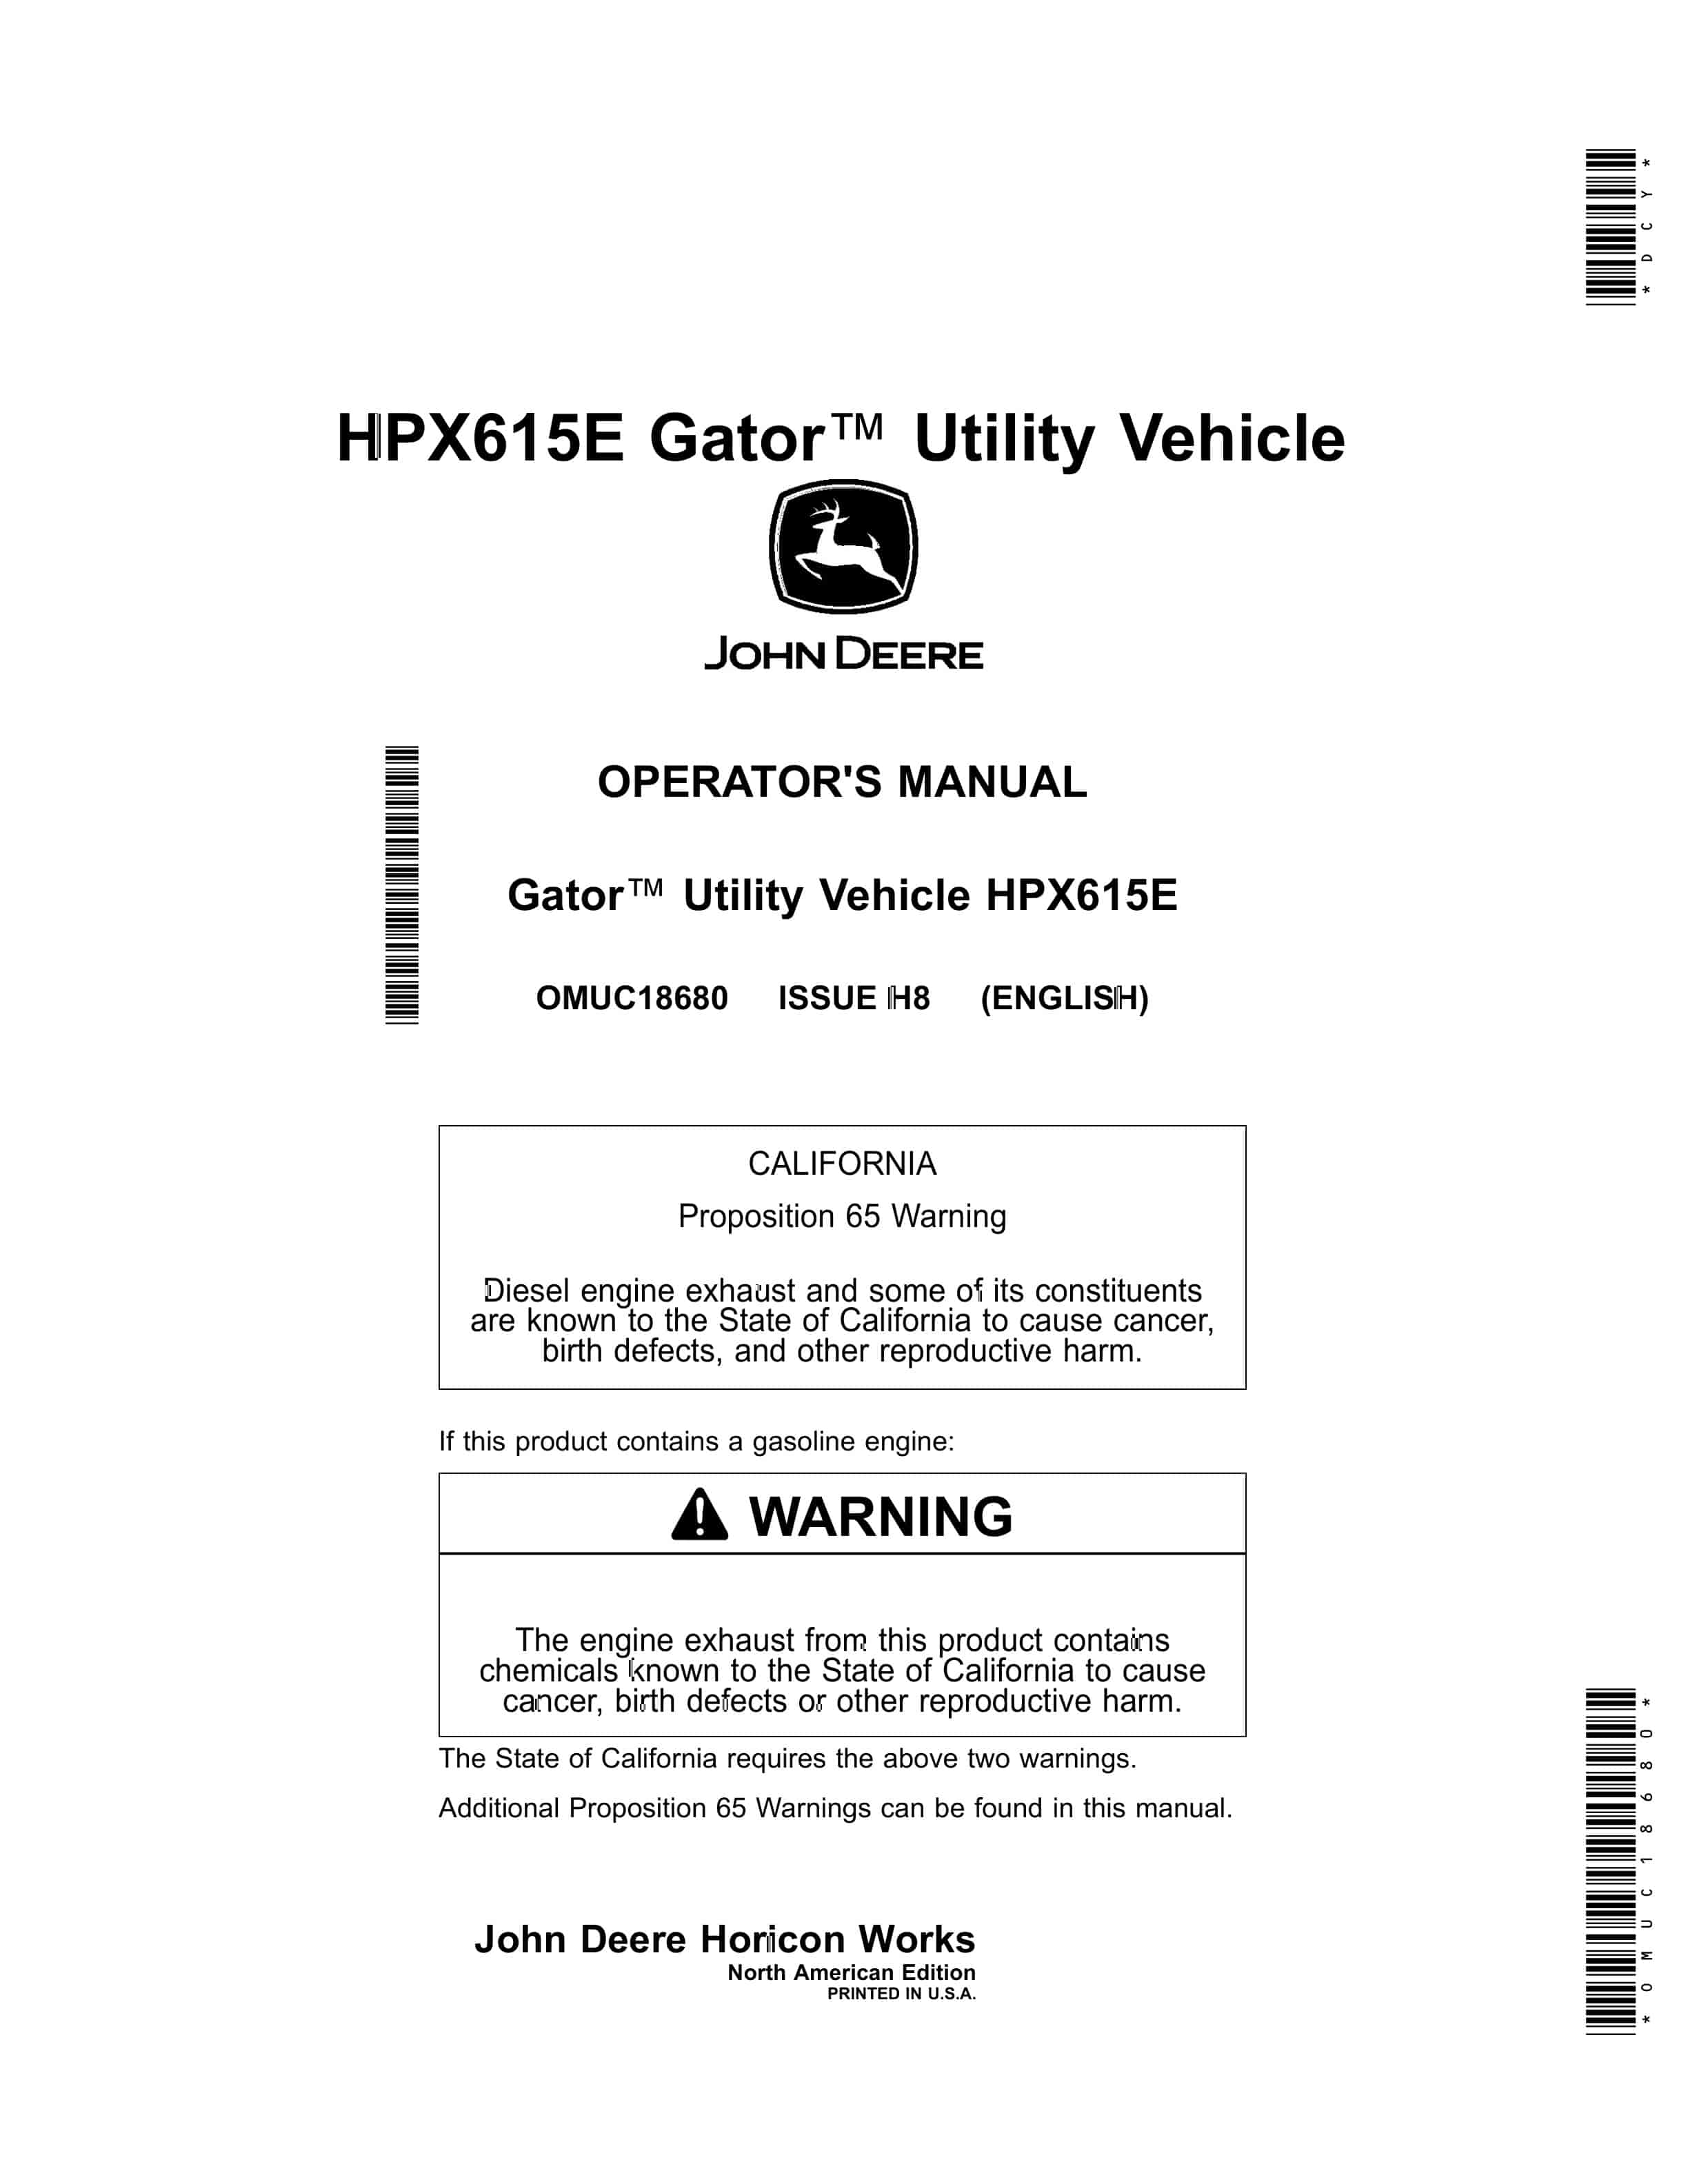 John Deere HPX615E Gator Utility Vehicles Operator Manual OMUC18680 1